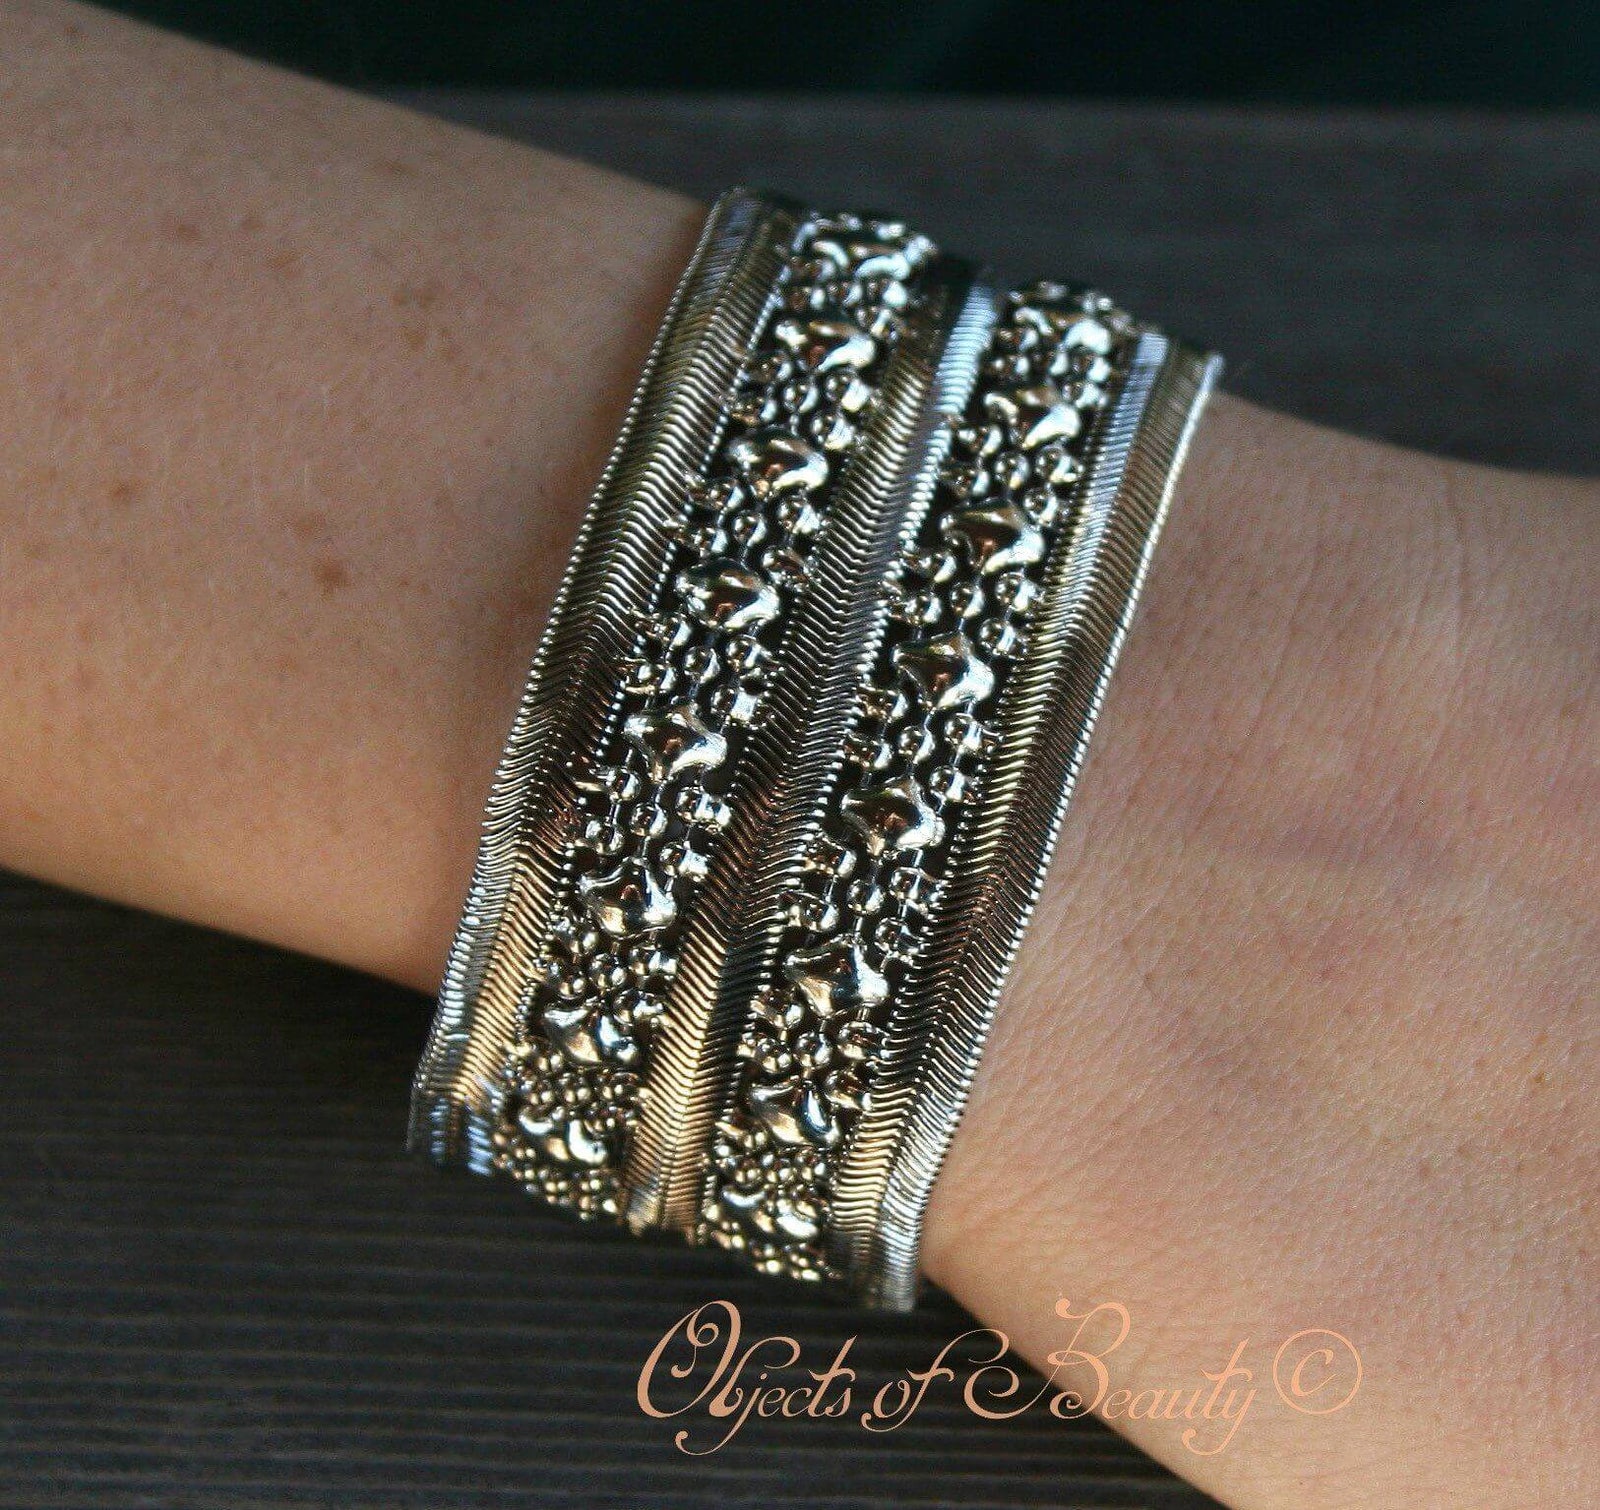 SG Liquid Metal Bracelets | Liquid Silver Jewelry - Objects of Beauty